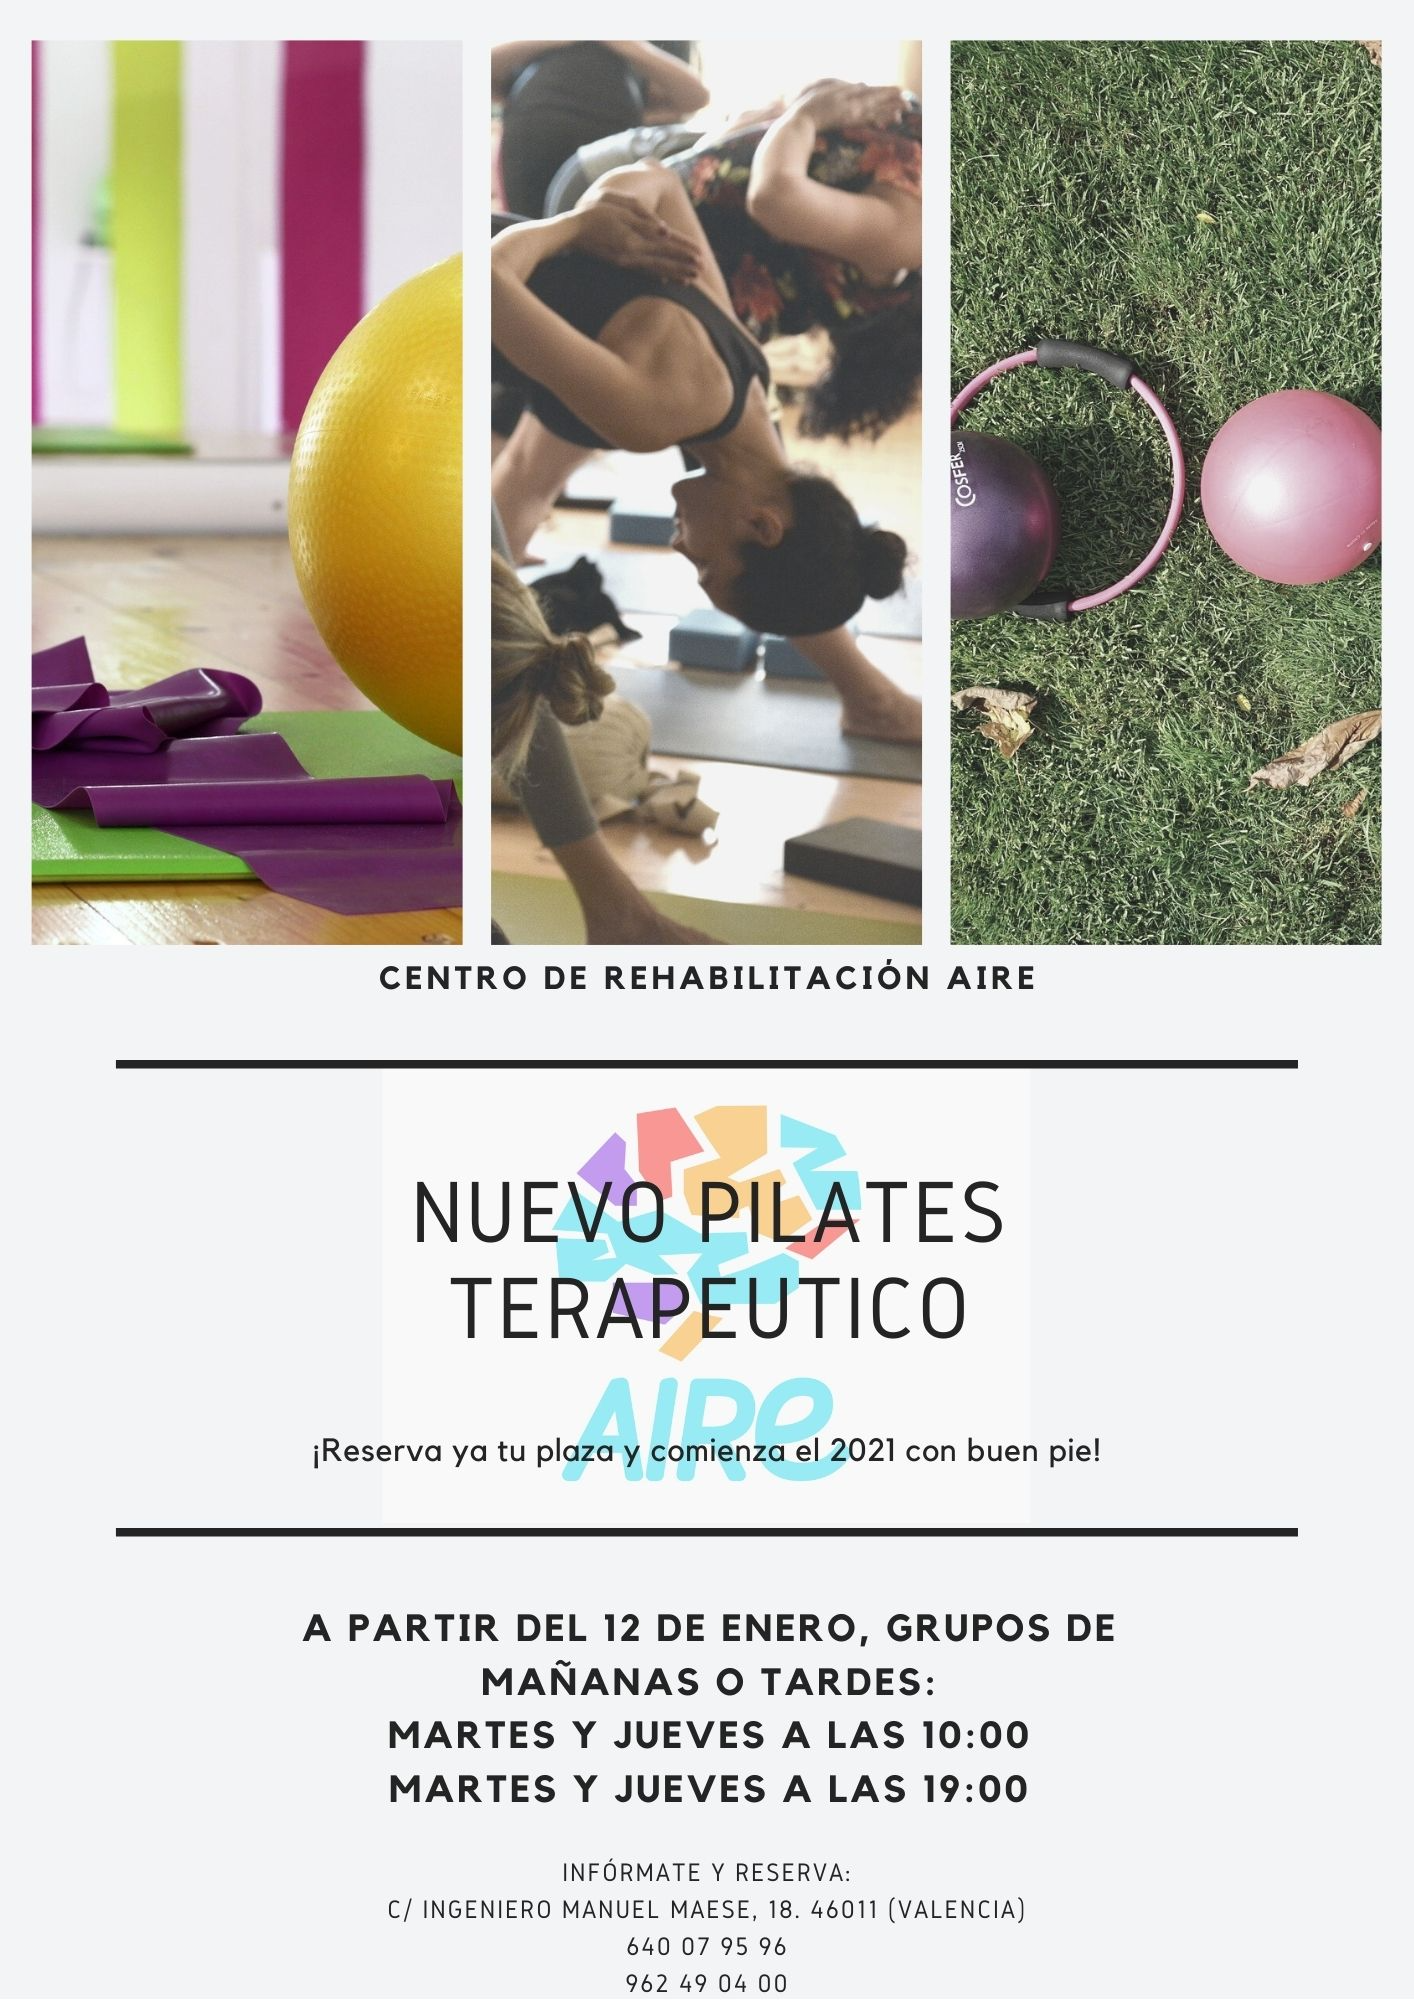 Nuevo taller de Pilates Terapéutico, ¡Reserva tu plaza!